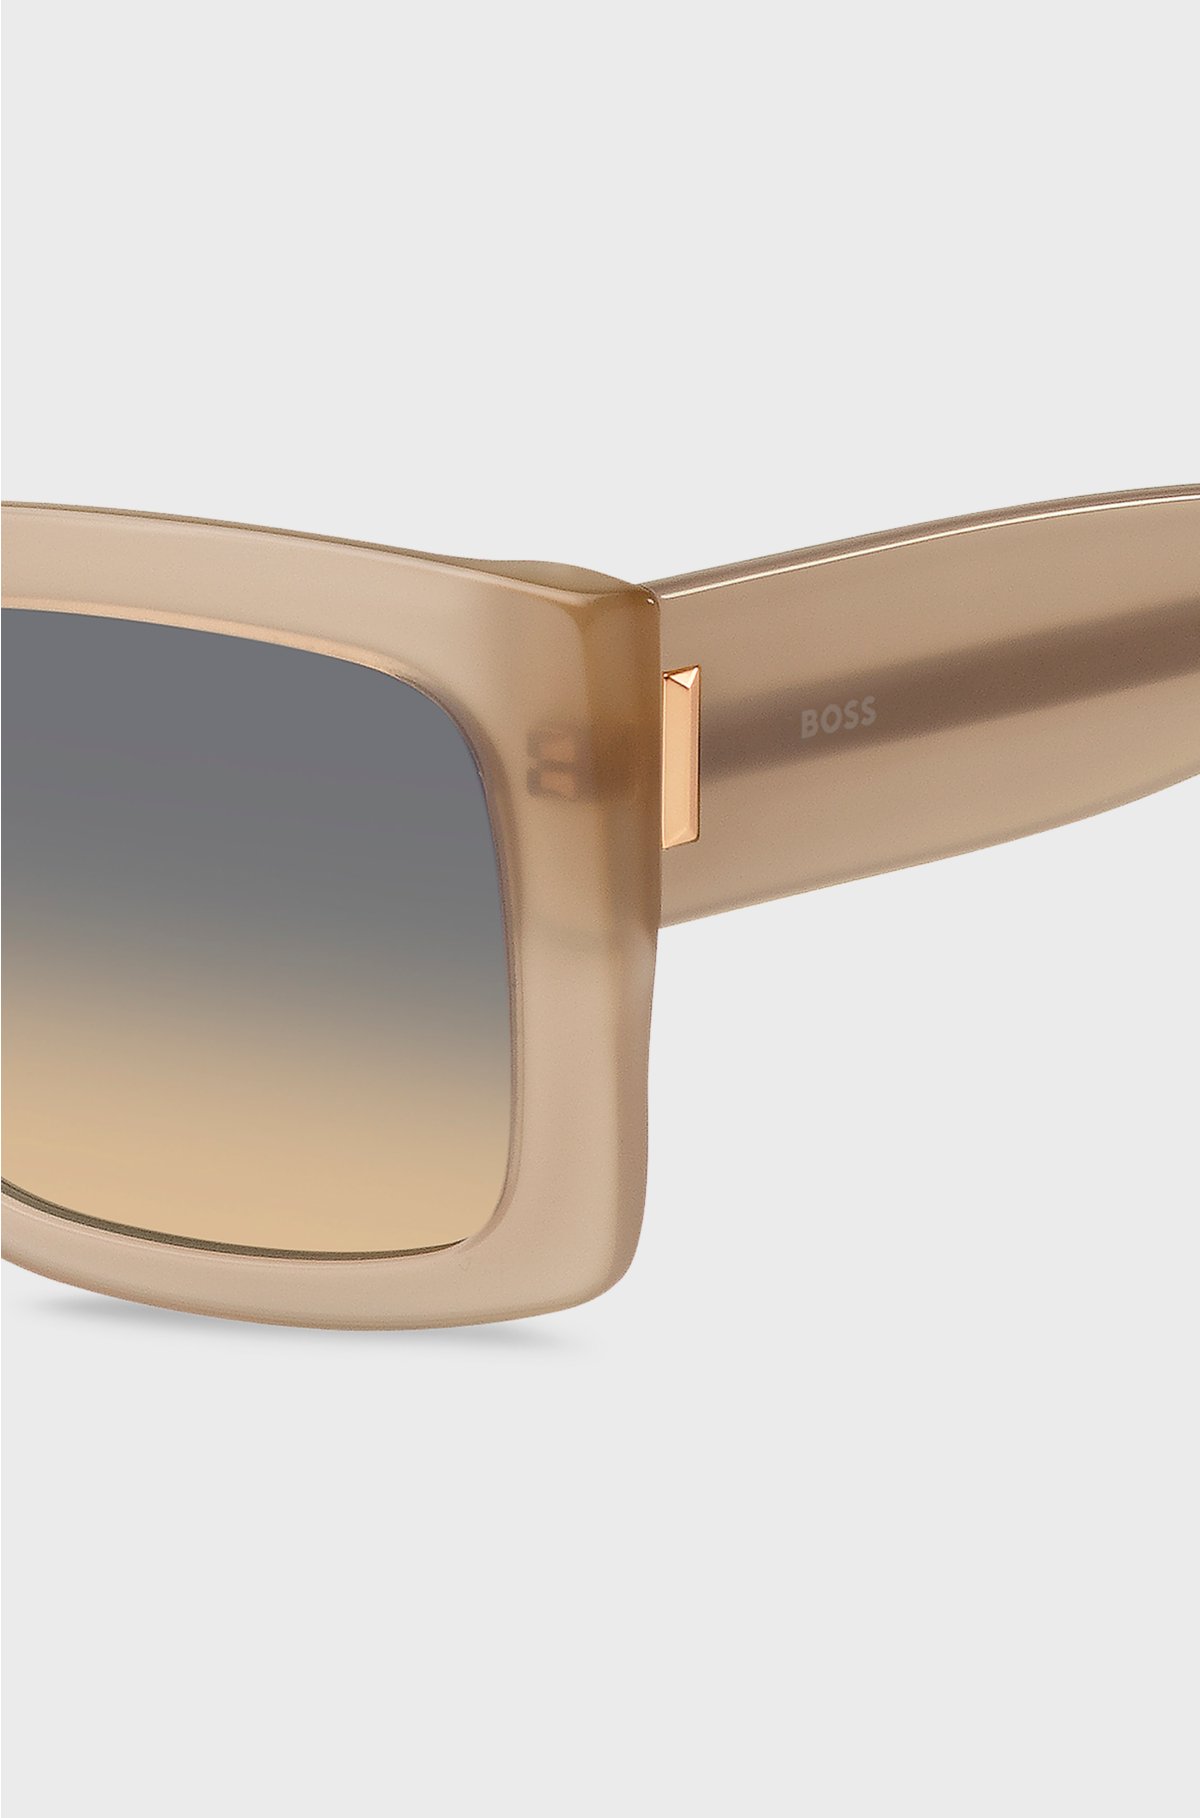 Opal bio-acetate sunglasses with signature hardware, Beige